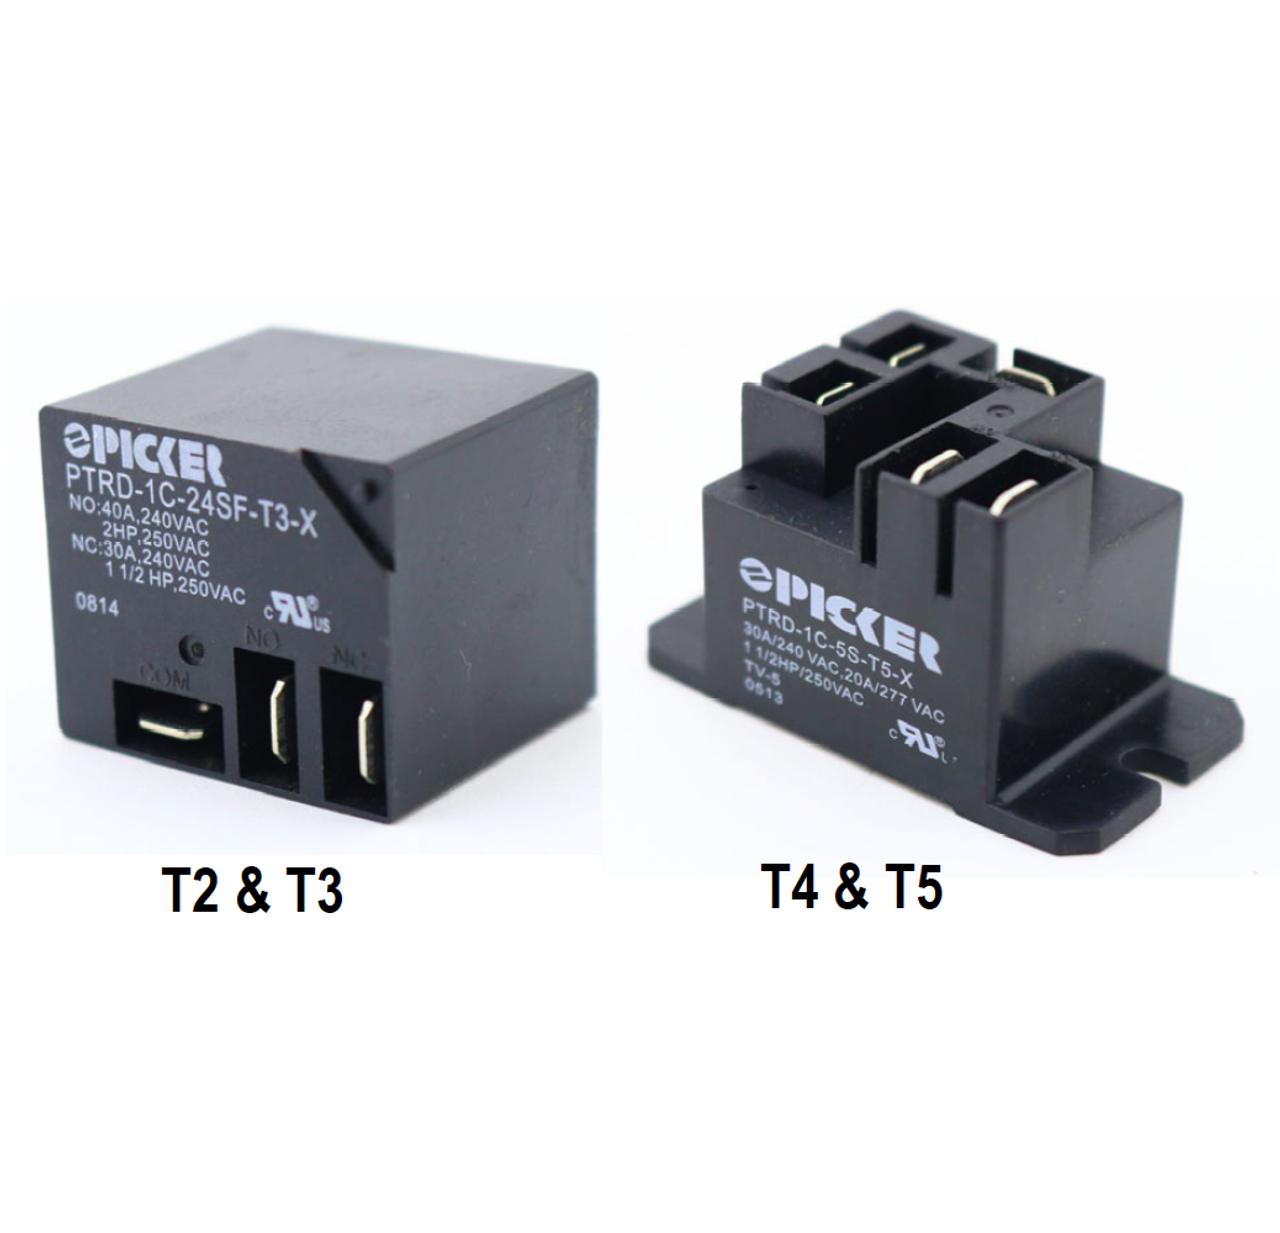 Picker PTRD-1A-24C-T3-X-0.6G Power Relays